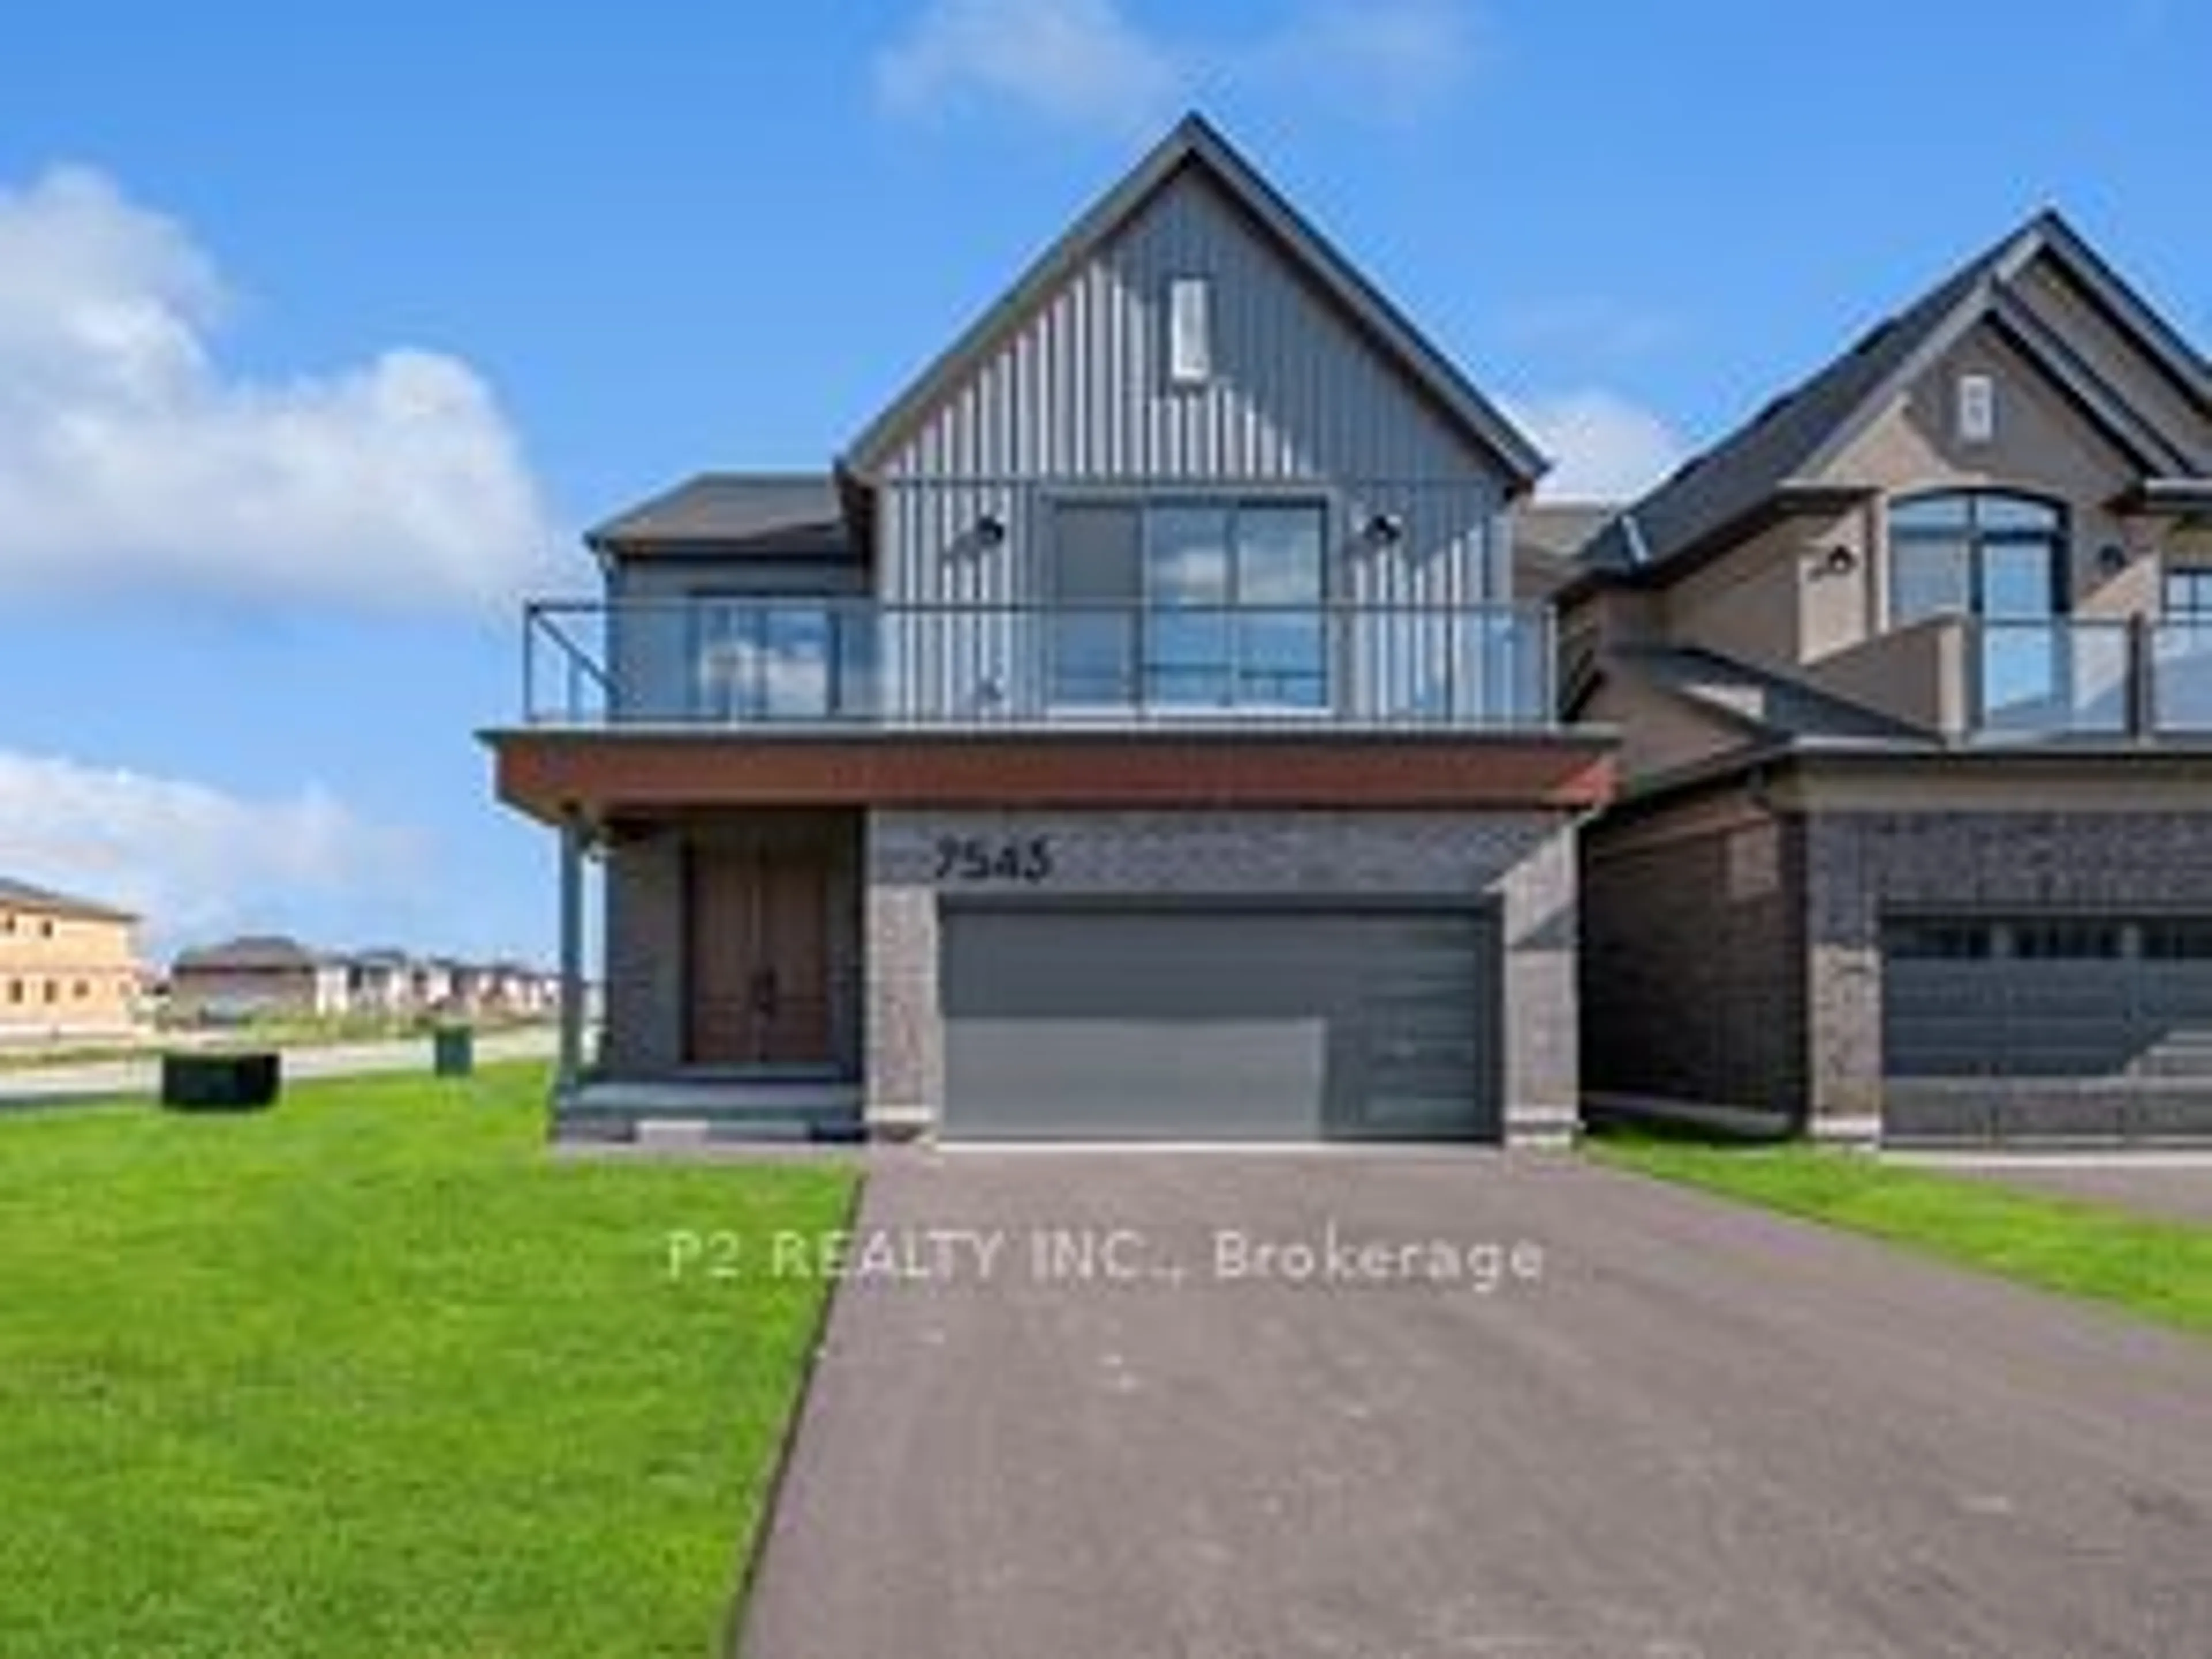 Frontside or backside of a home for 7543 Splendour Dr, Niagara Falls Ontario L2H 3V8